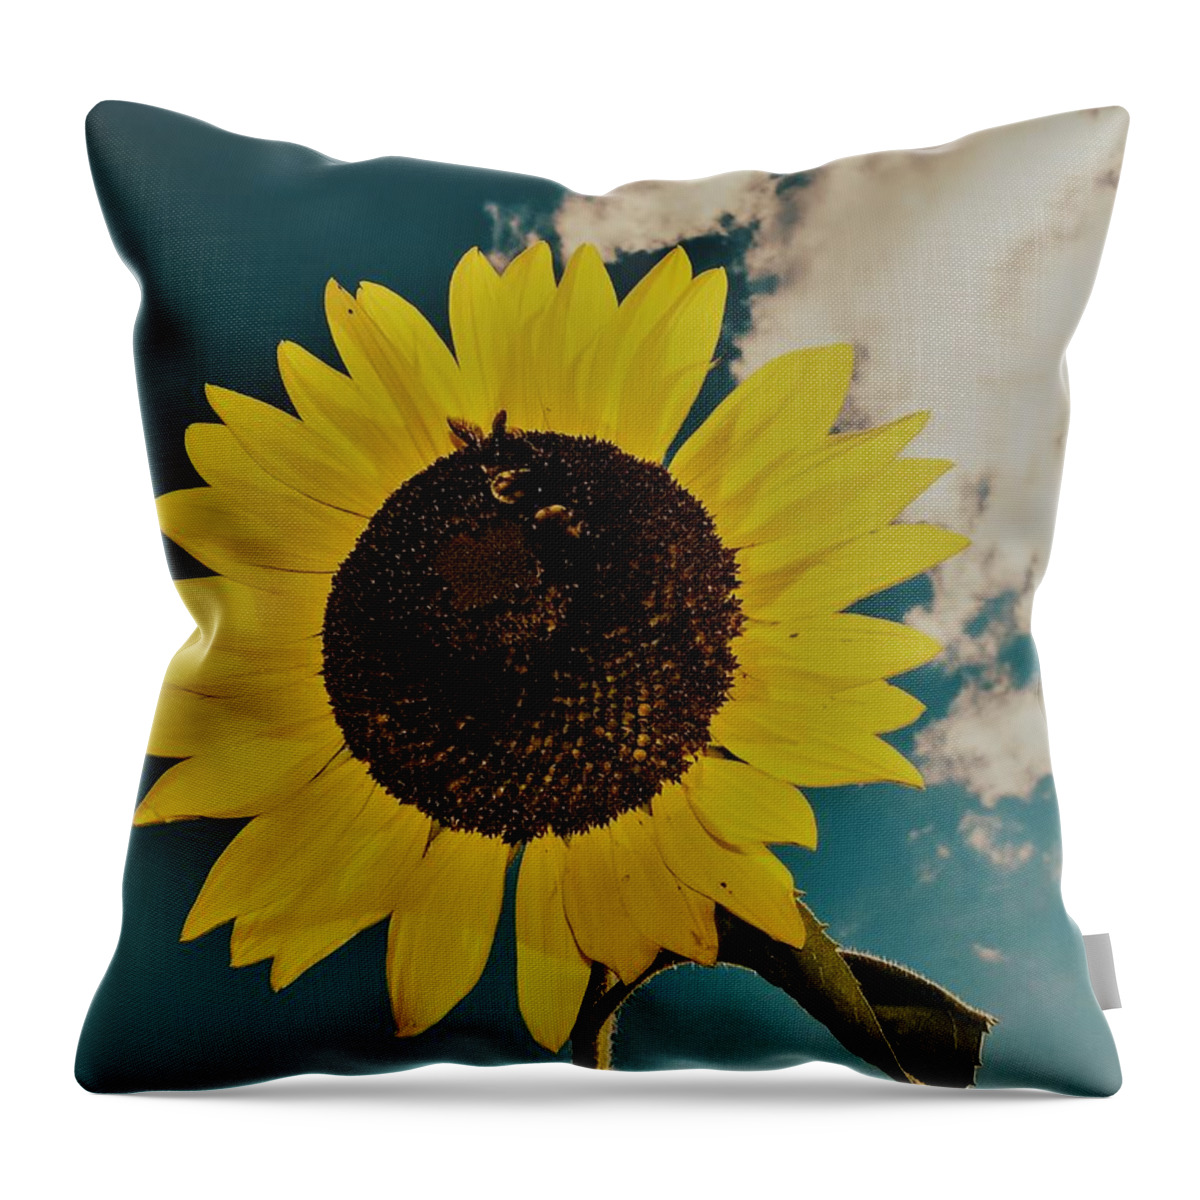 Sun Throw Pillow featuring the photograph Sunflower by Randy Sylvia